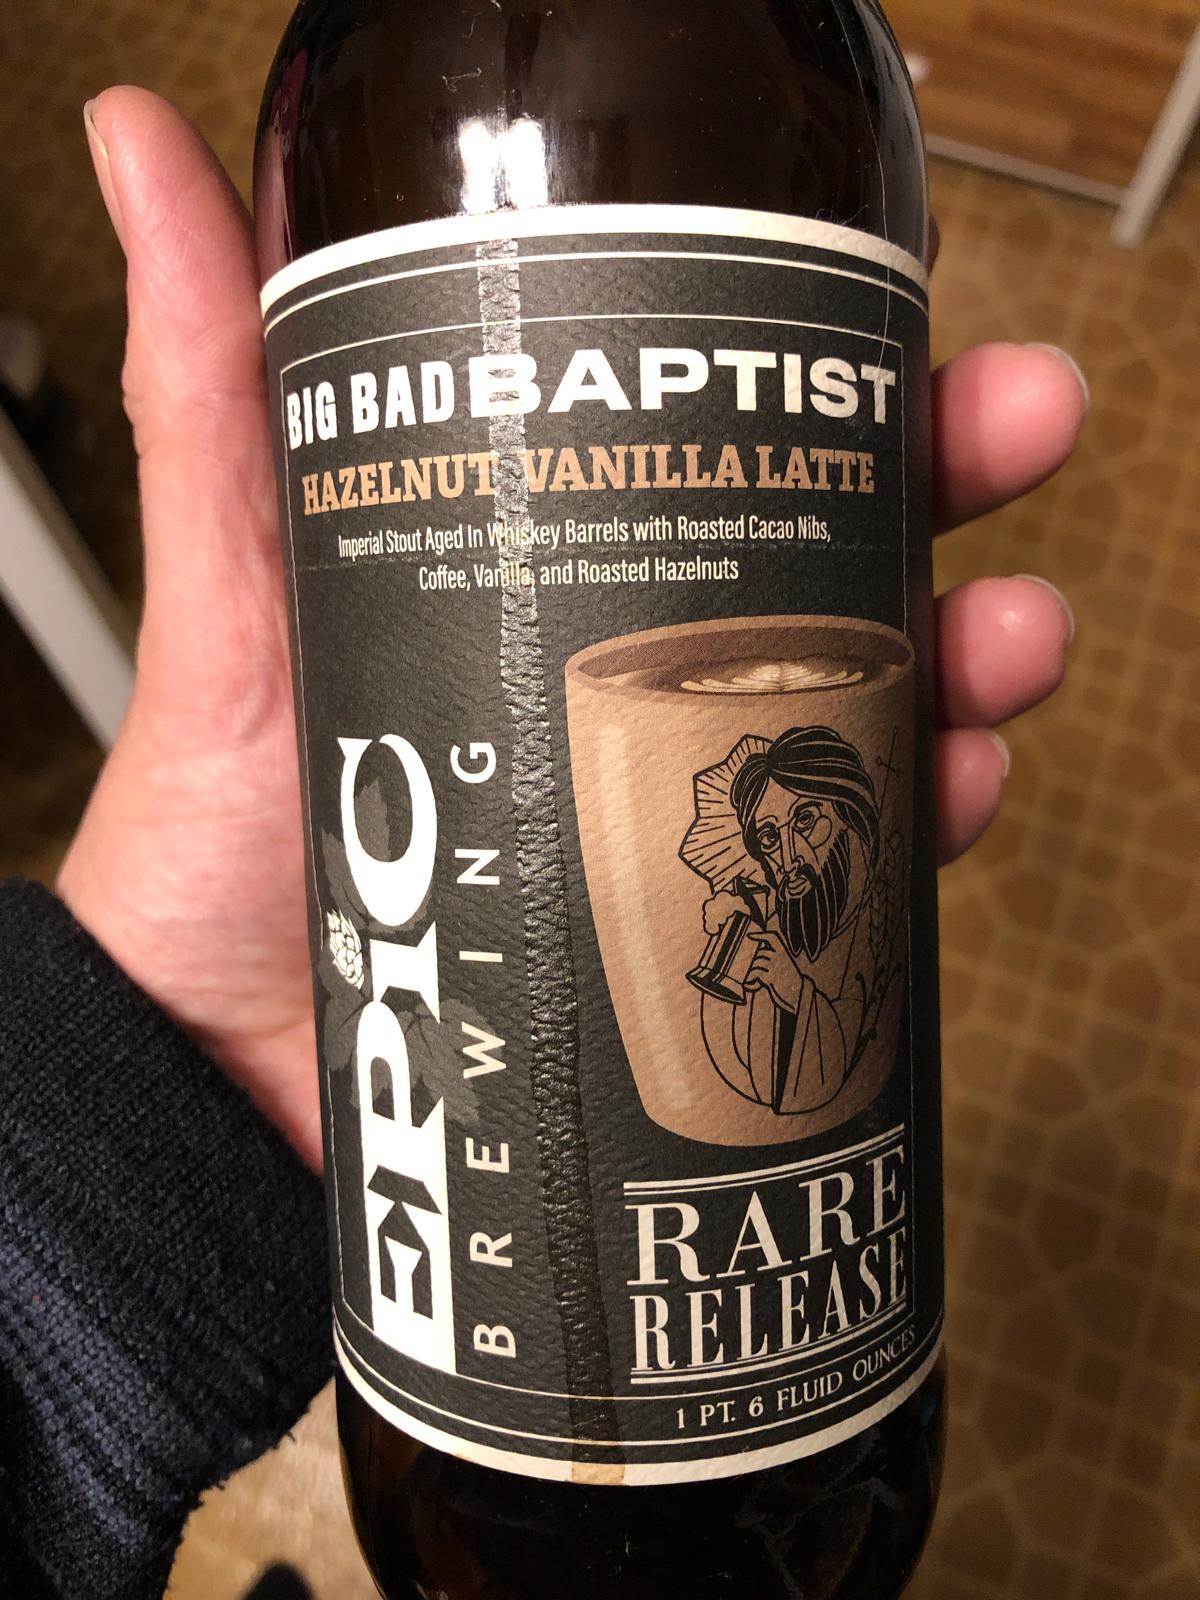 Big Bad Baptist Hazelnut Vanilla Latte